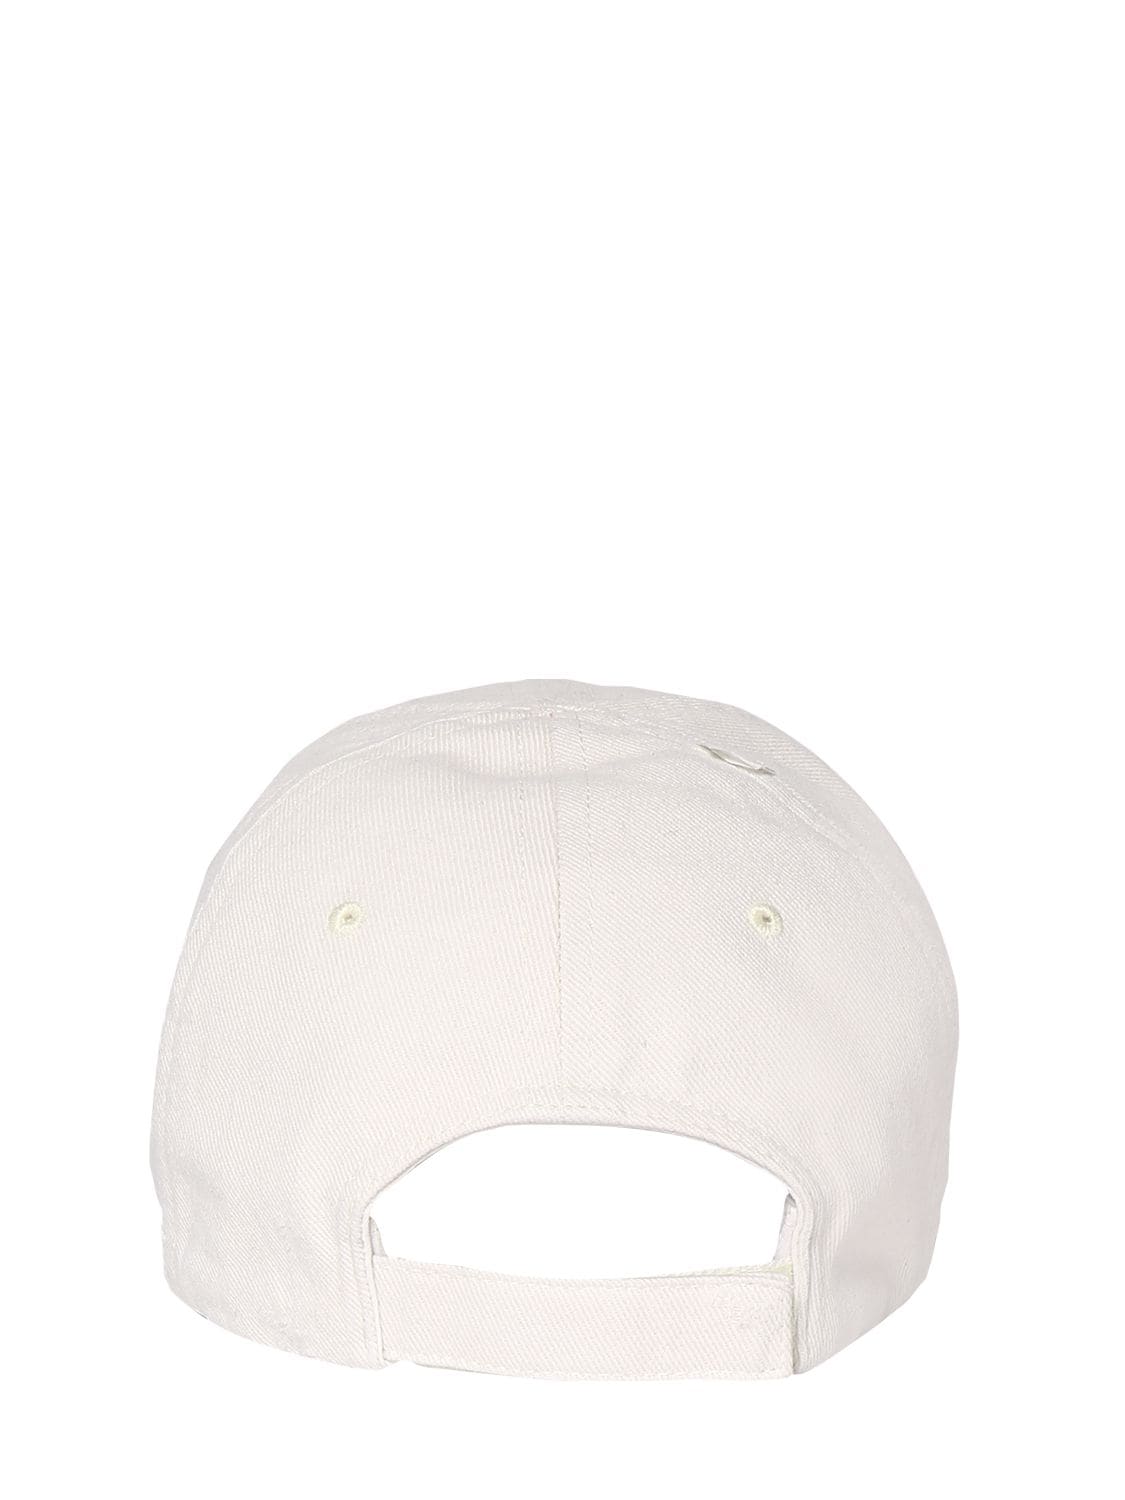 Balenciaga Gaffer Cotton Hat In Ecru   ModeSens